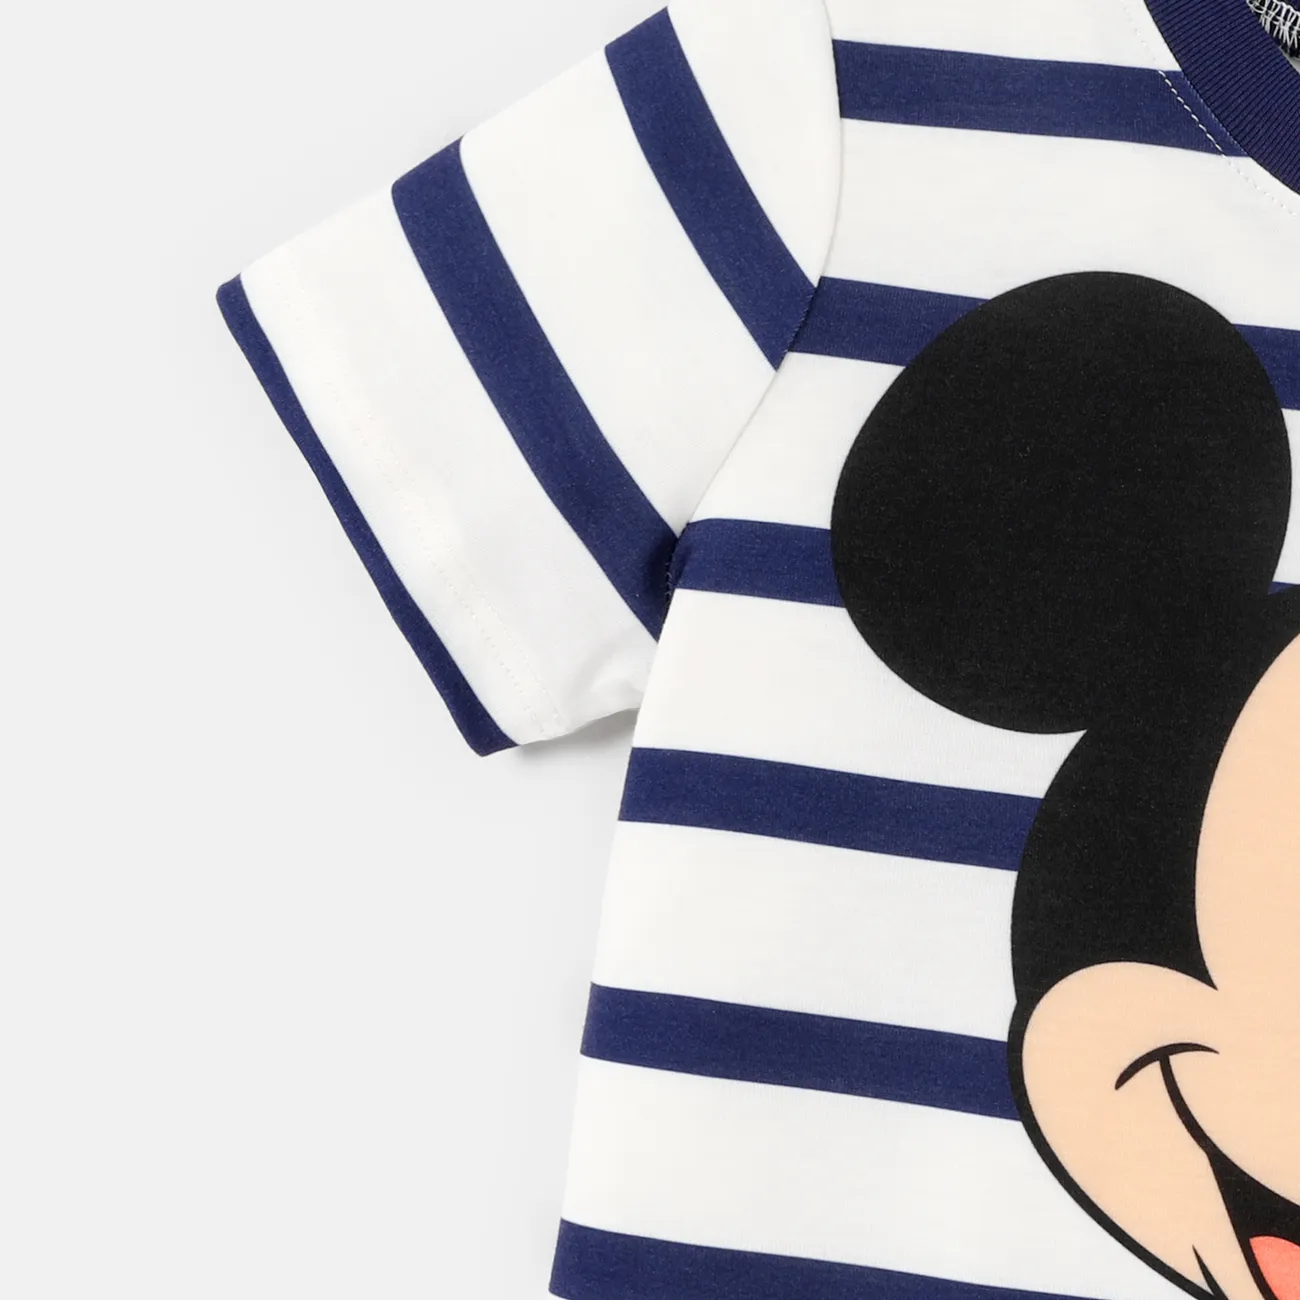 Disney Mickey and Friends Familien-Looks Muttertag Kurzärmelig Familien-Outfits Oberteile Farbstreifen big image 1